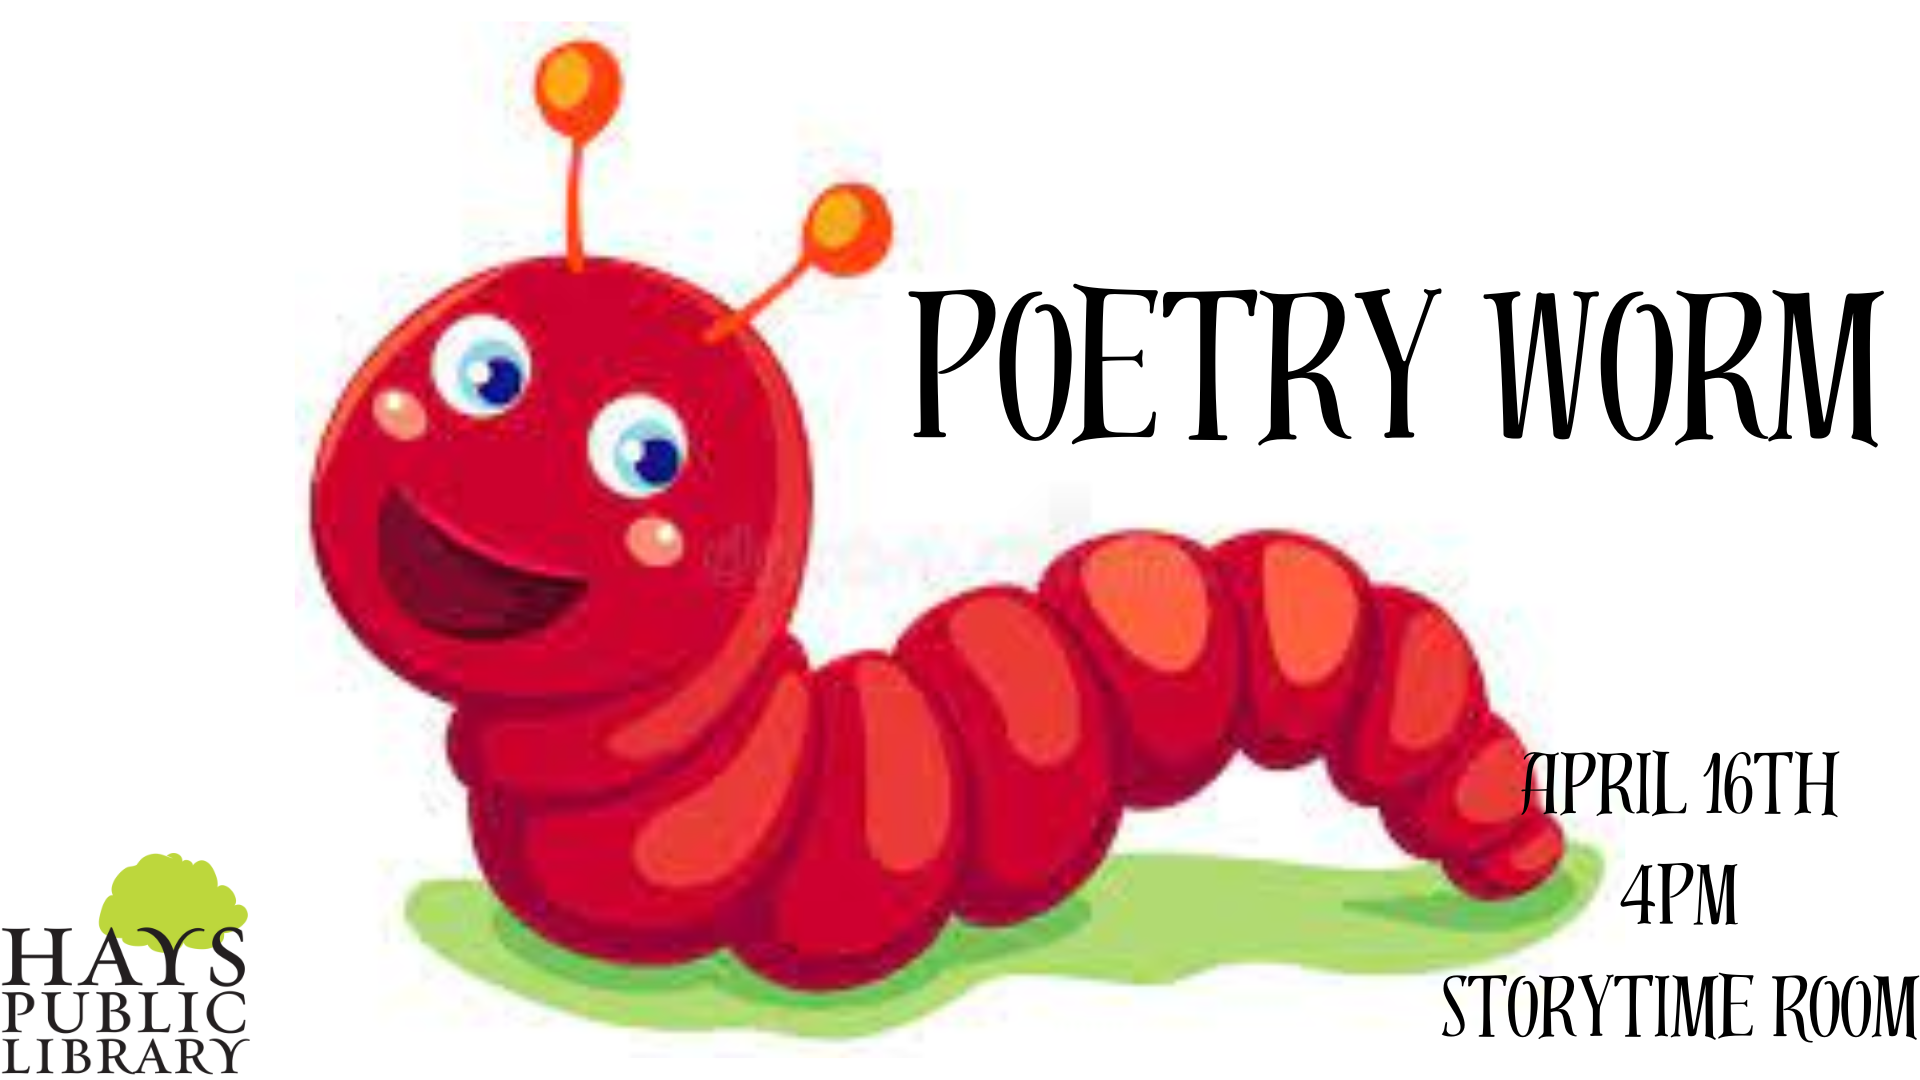 Poetry worm